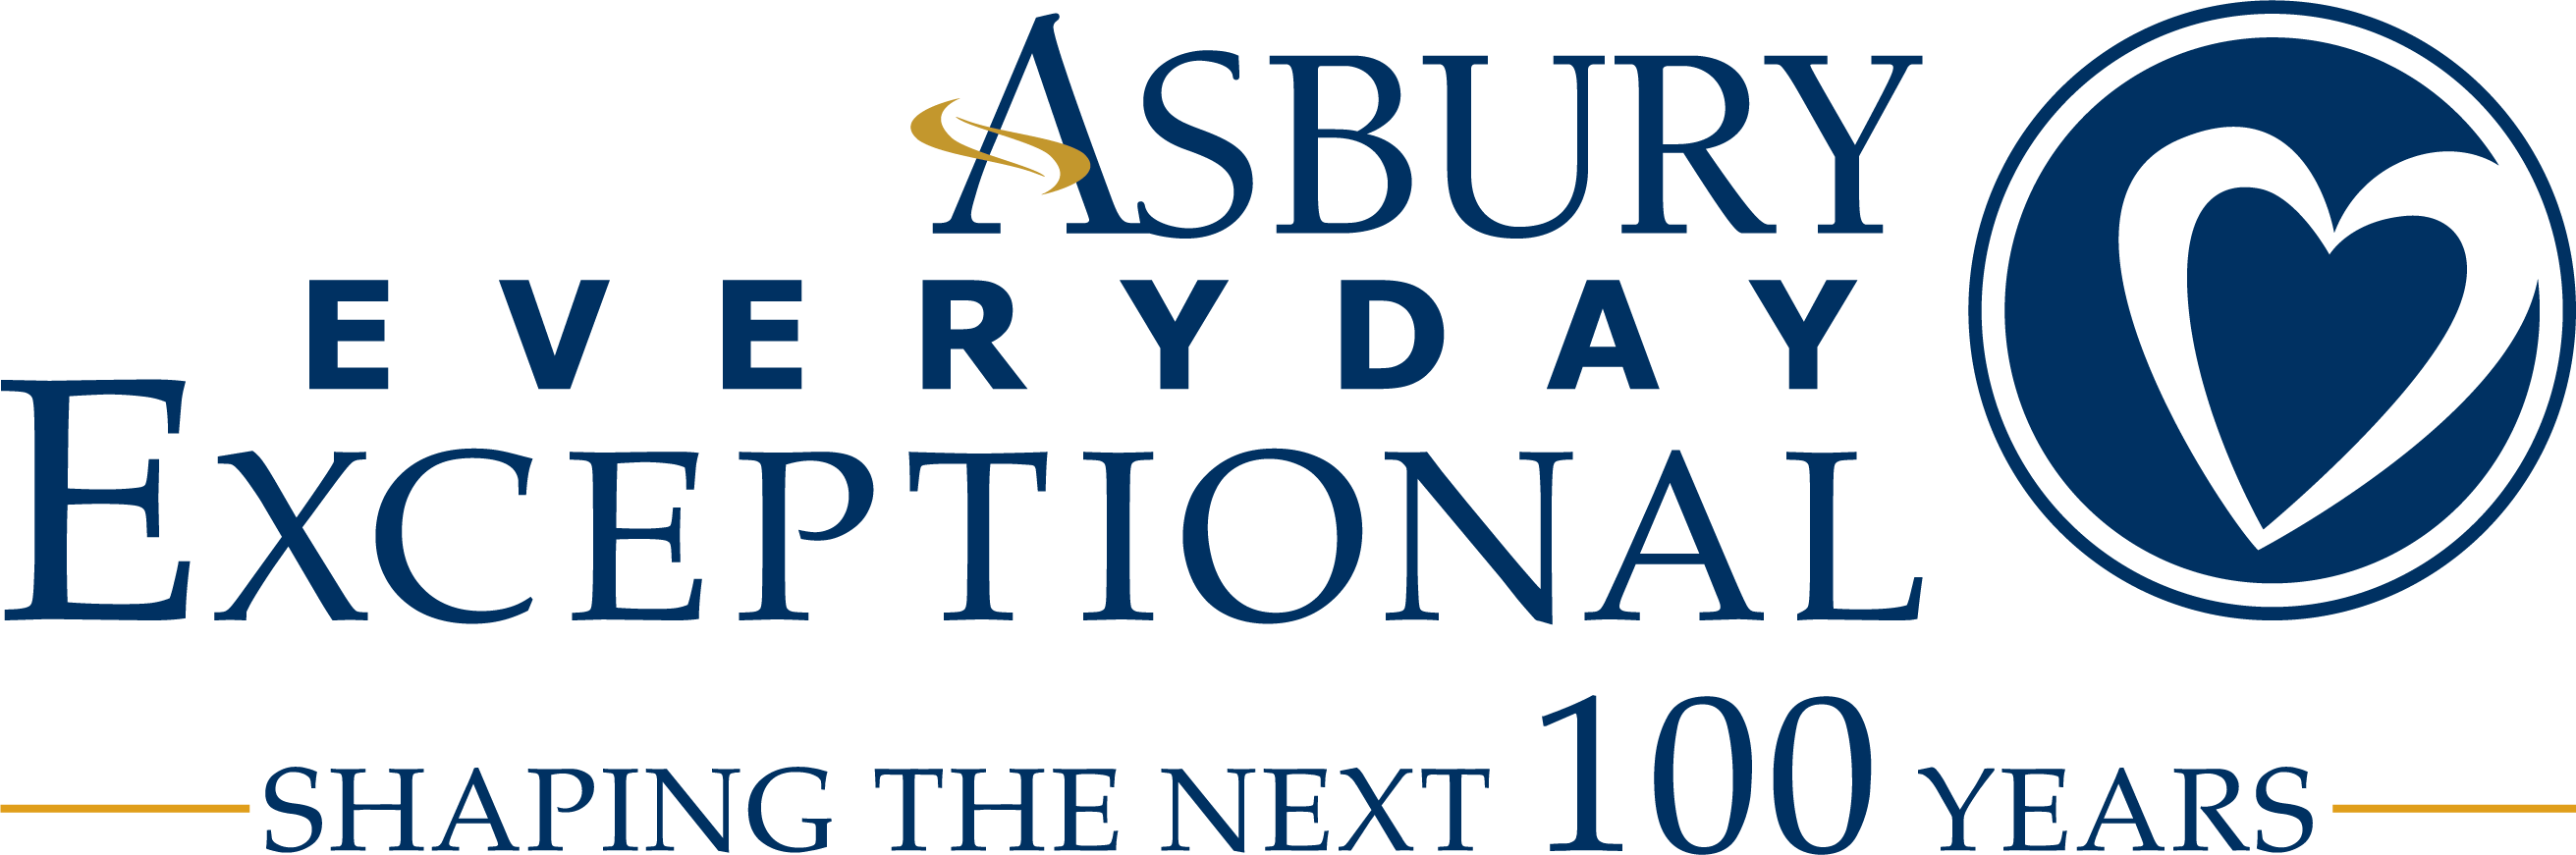 Asbury_Foundation_logo